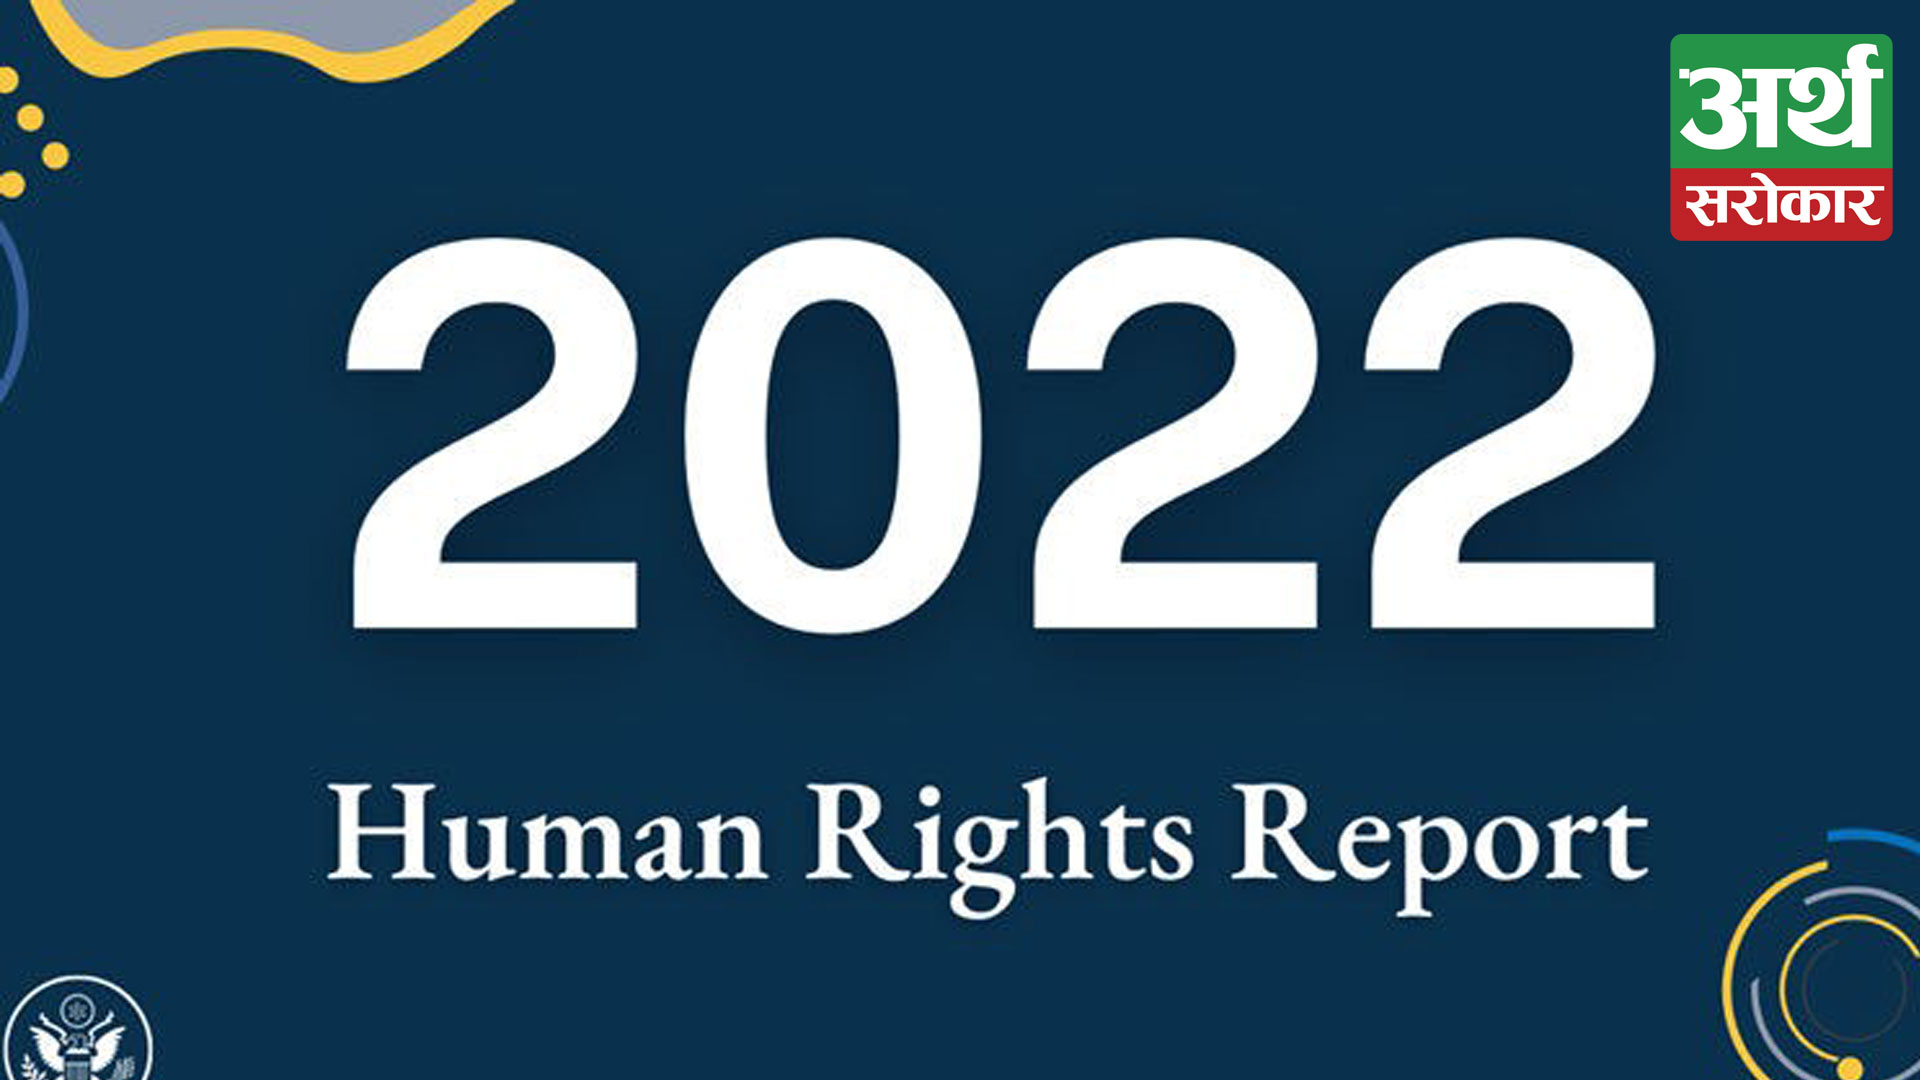 Human rights, the United States and Bangladesh